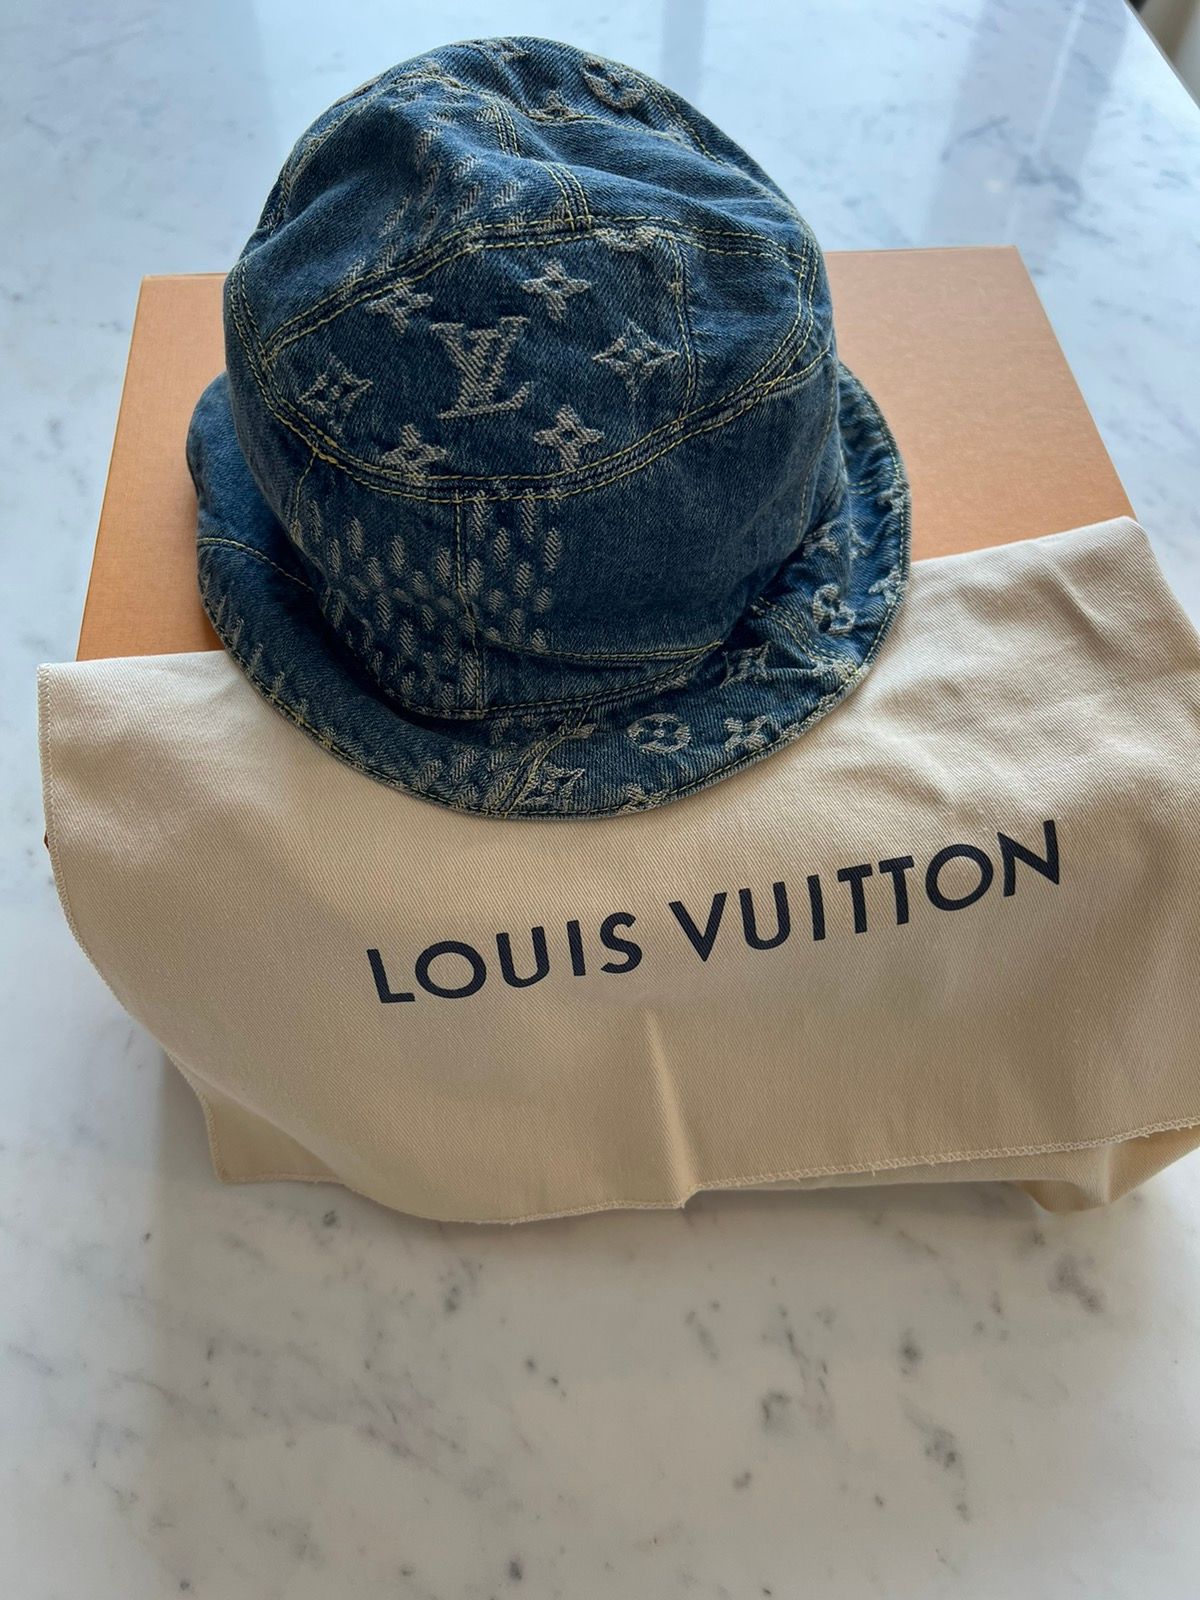 Louis Vuitton Nigo Damier Giant Wave Monogram Sun Hat